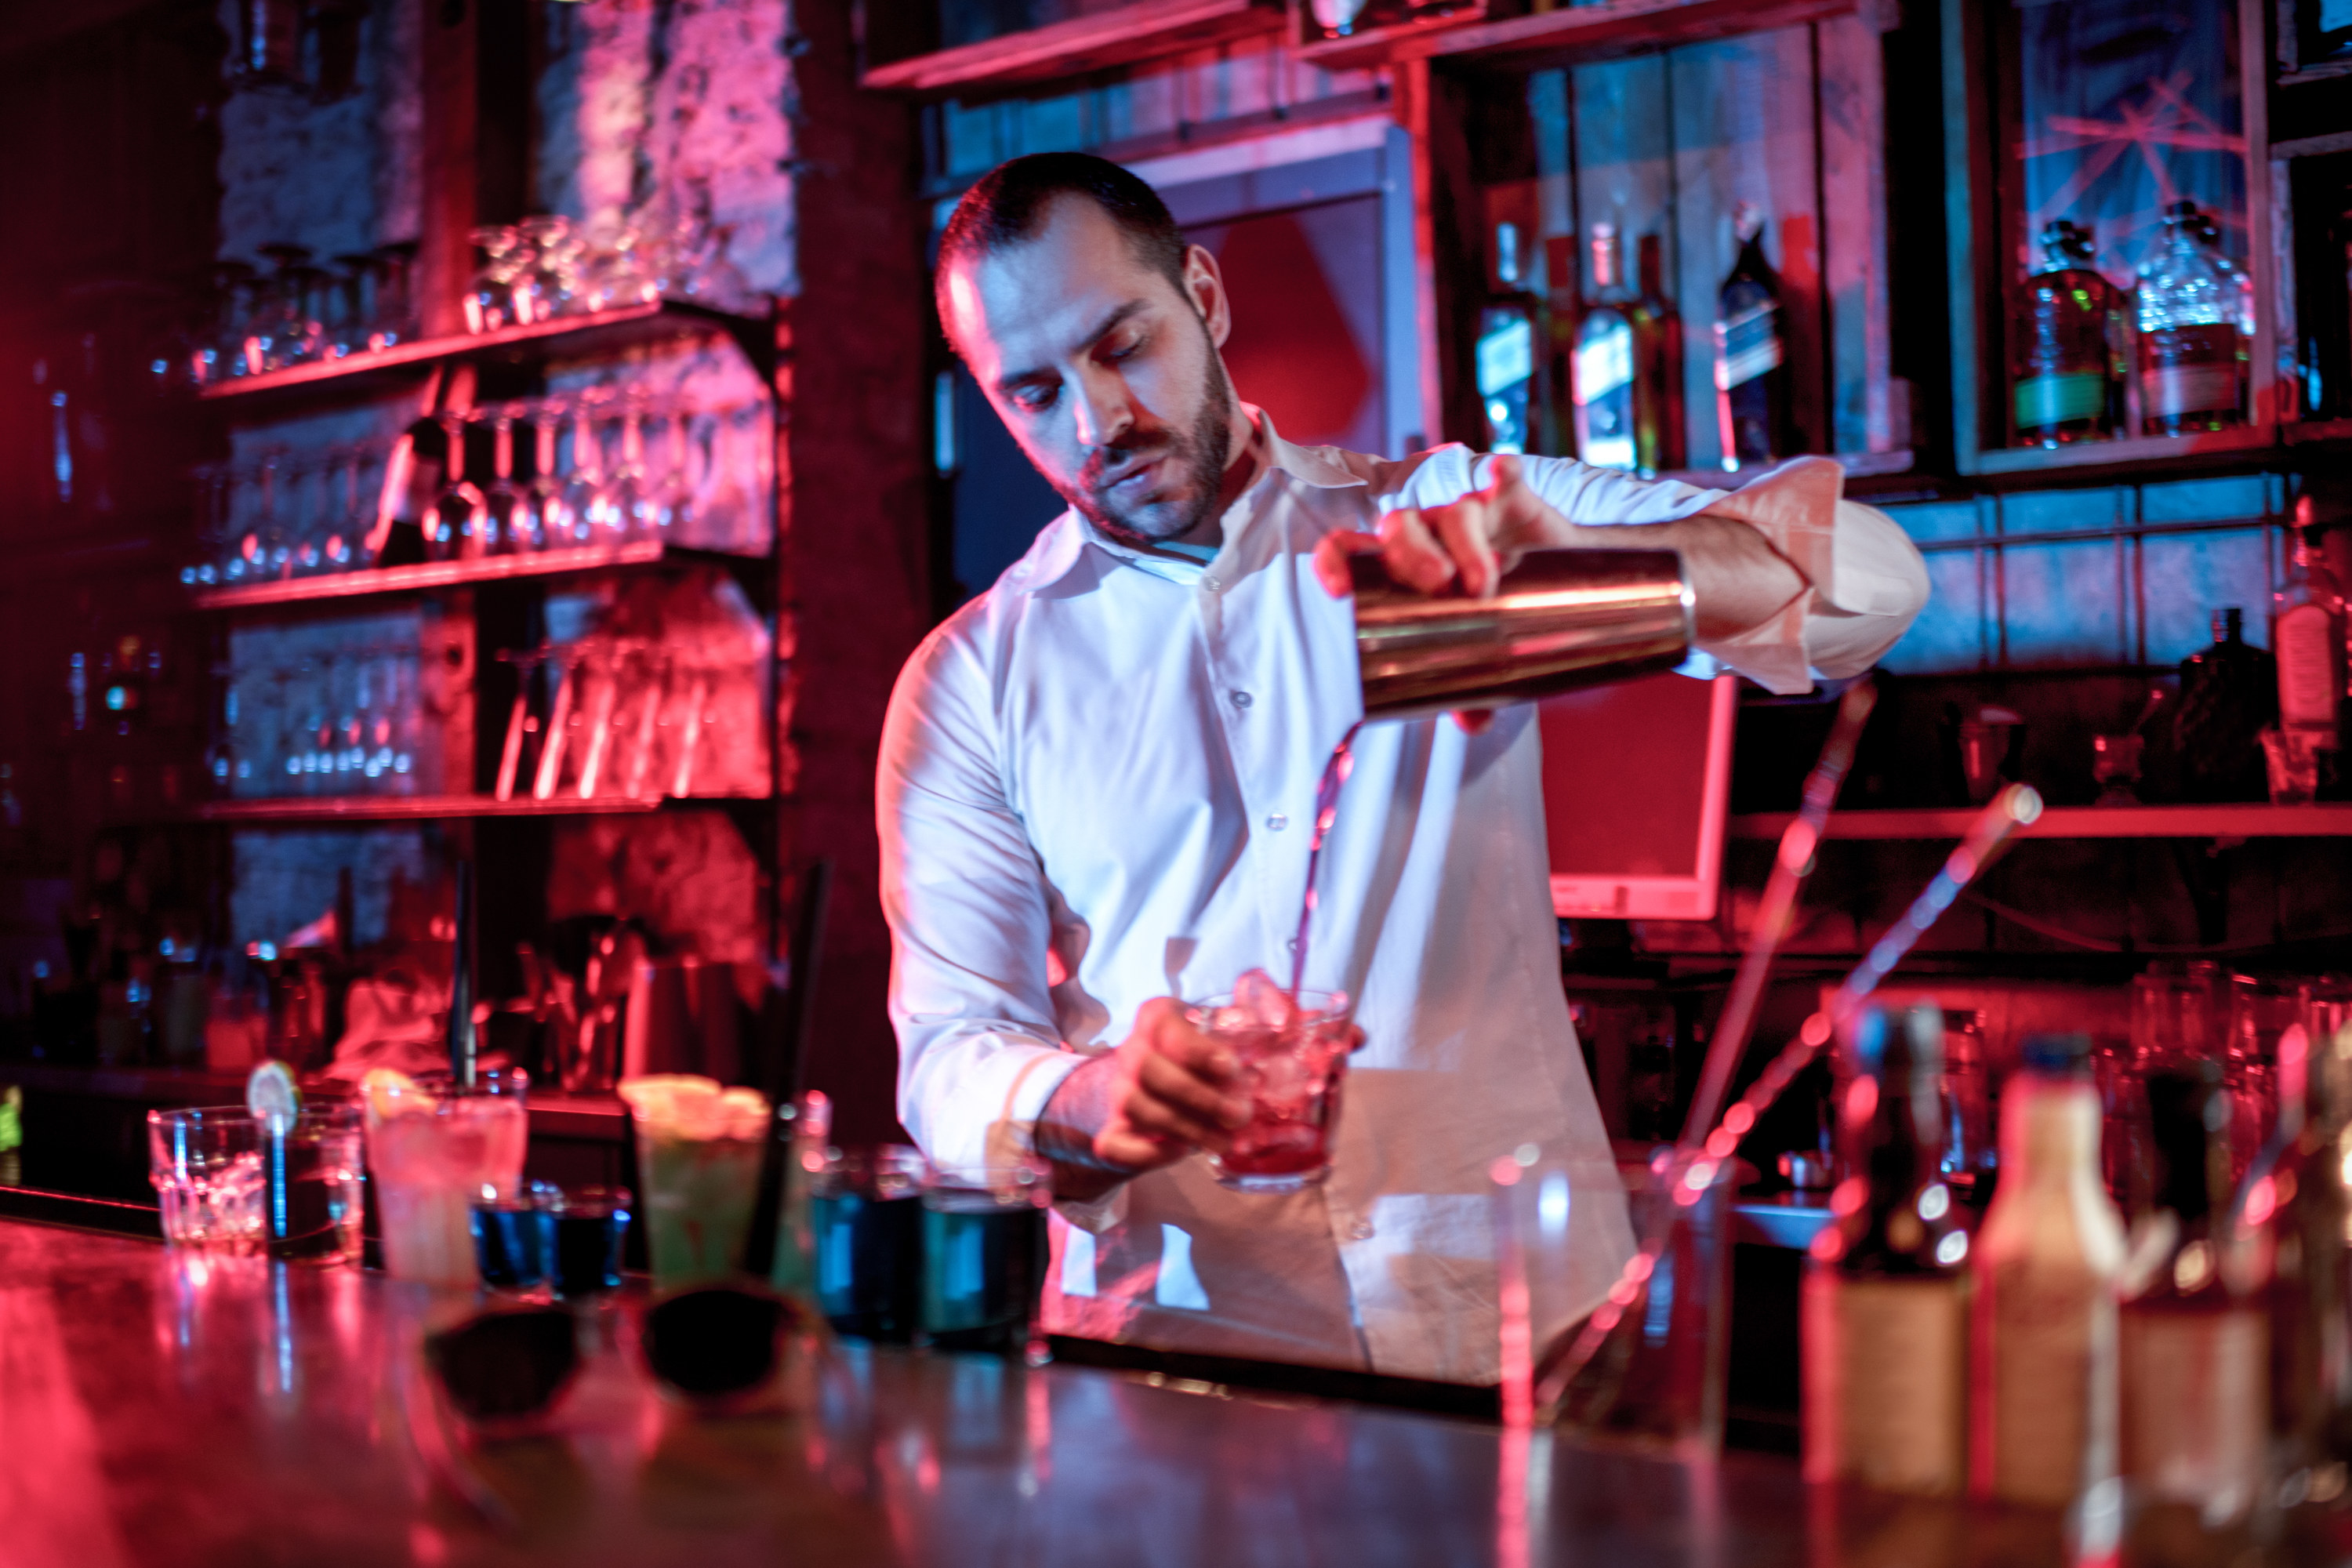 A bartender prepares a drink